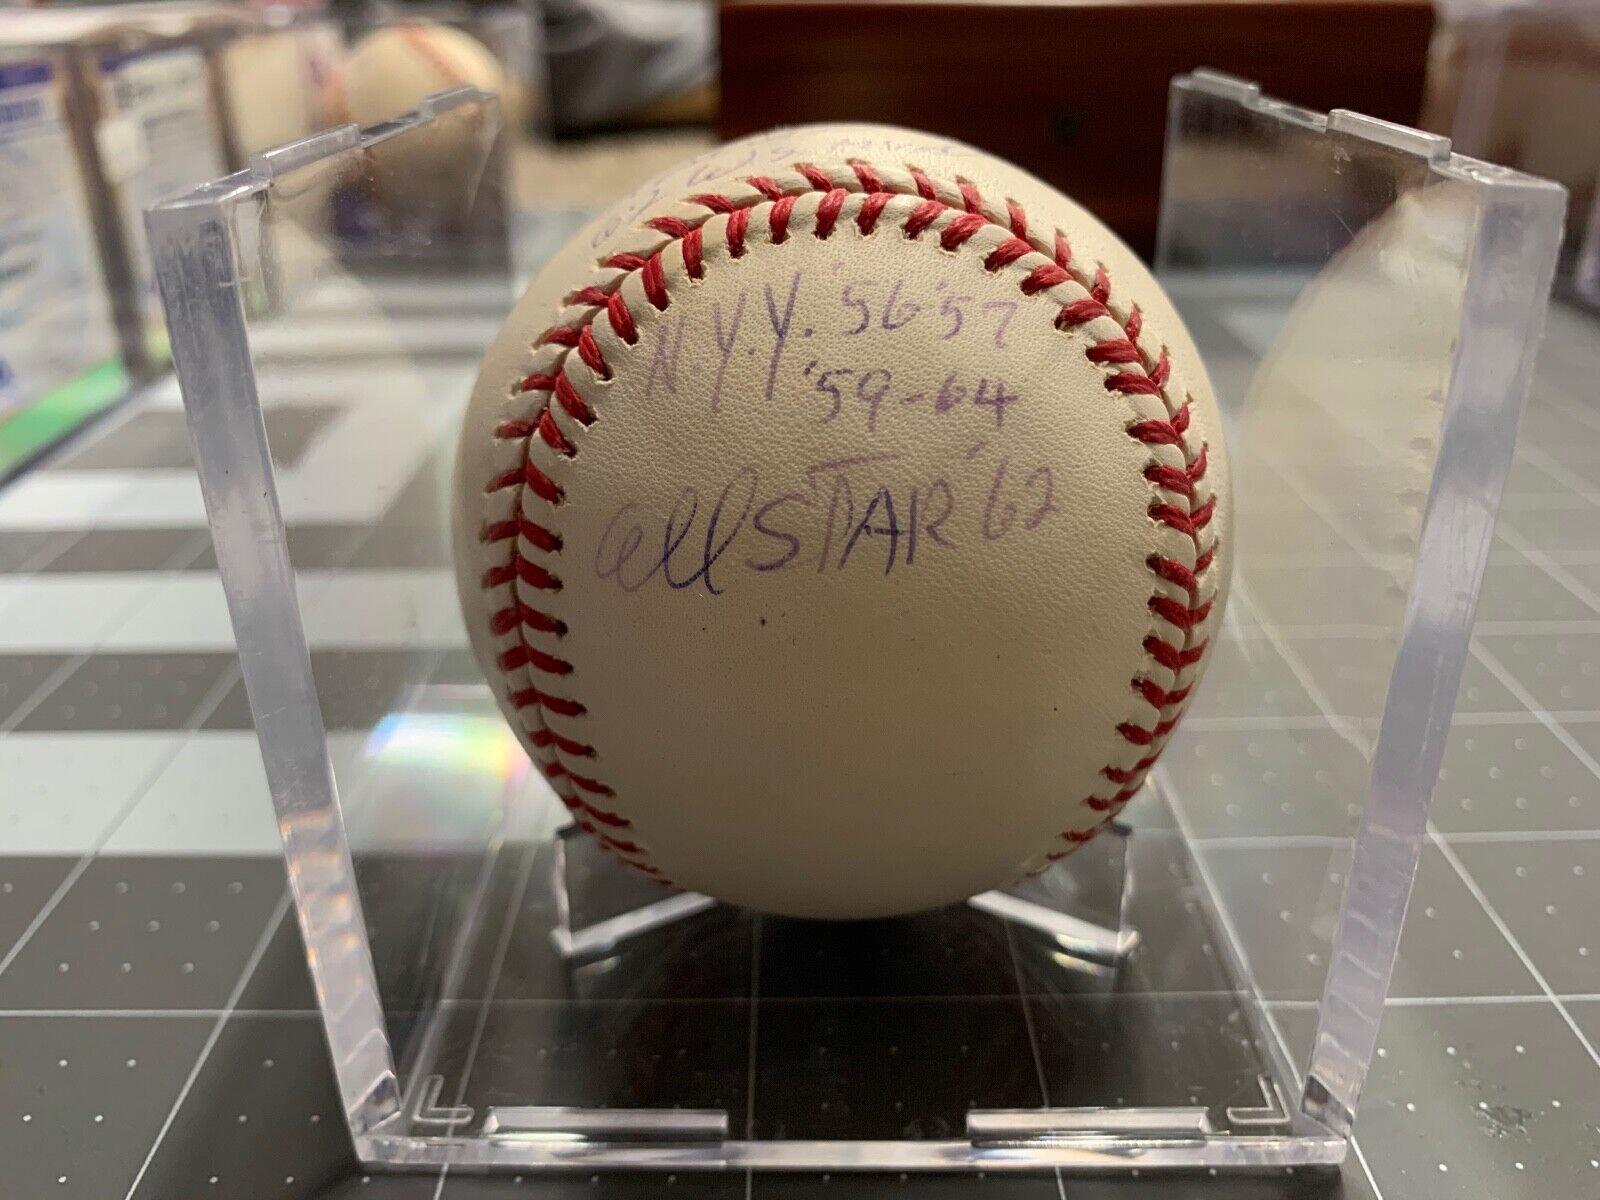 Ralph Terry Yankees Autographed Baseball W/ Inscription PSA Certified AI63887